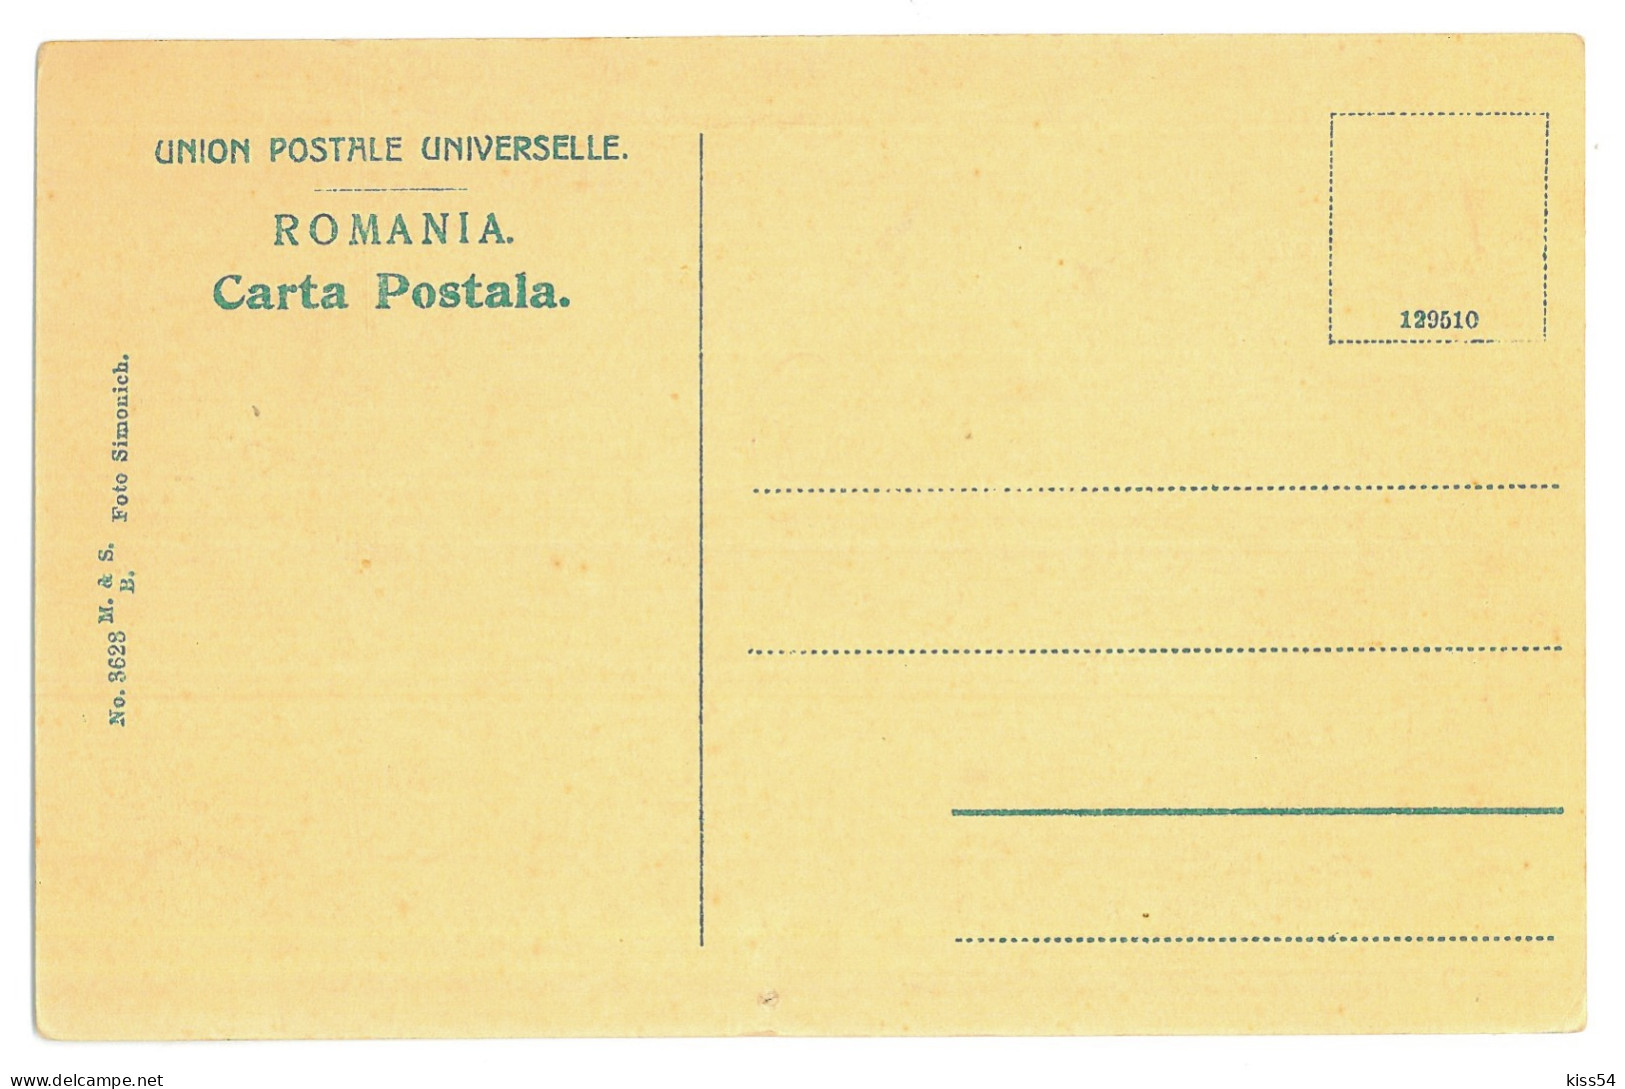 RO 77 - 24311 PASCANI, Iasi, Railway Station View, Romania - Old Postcard - Unused - Romania